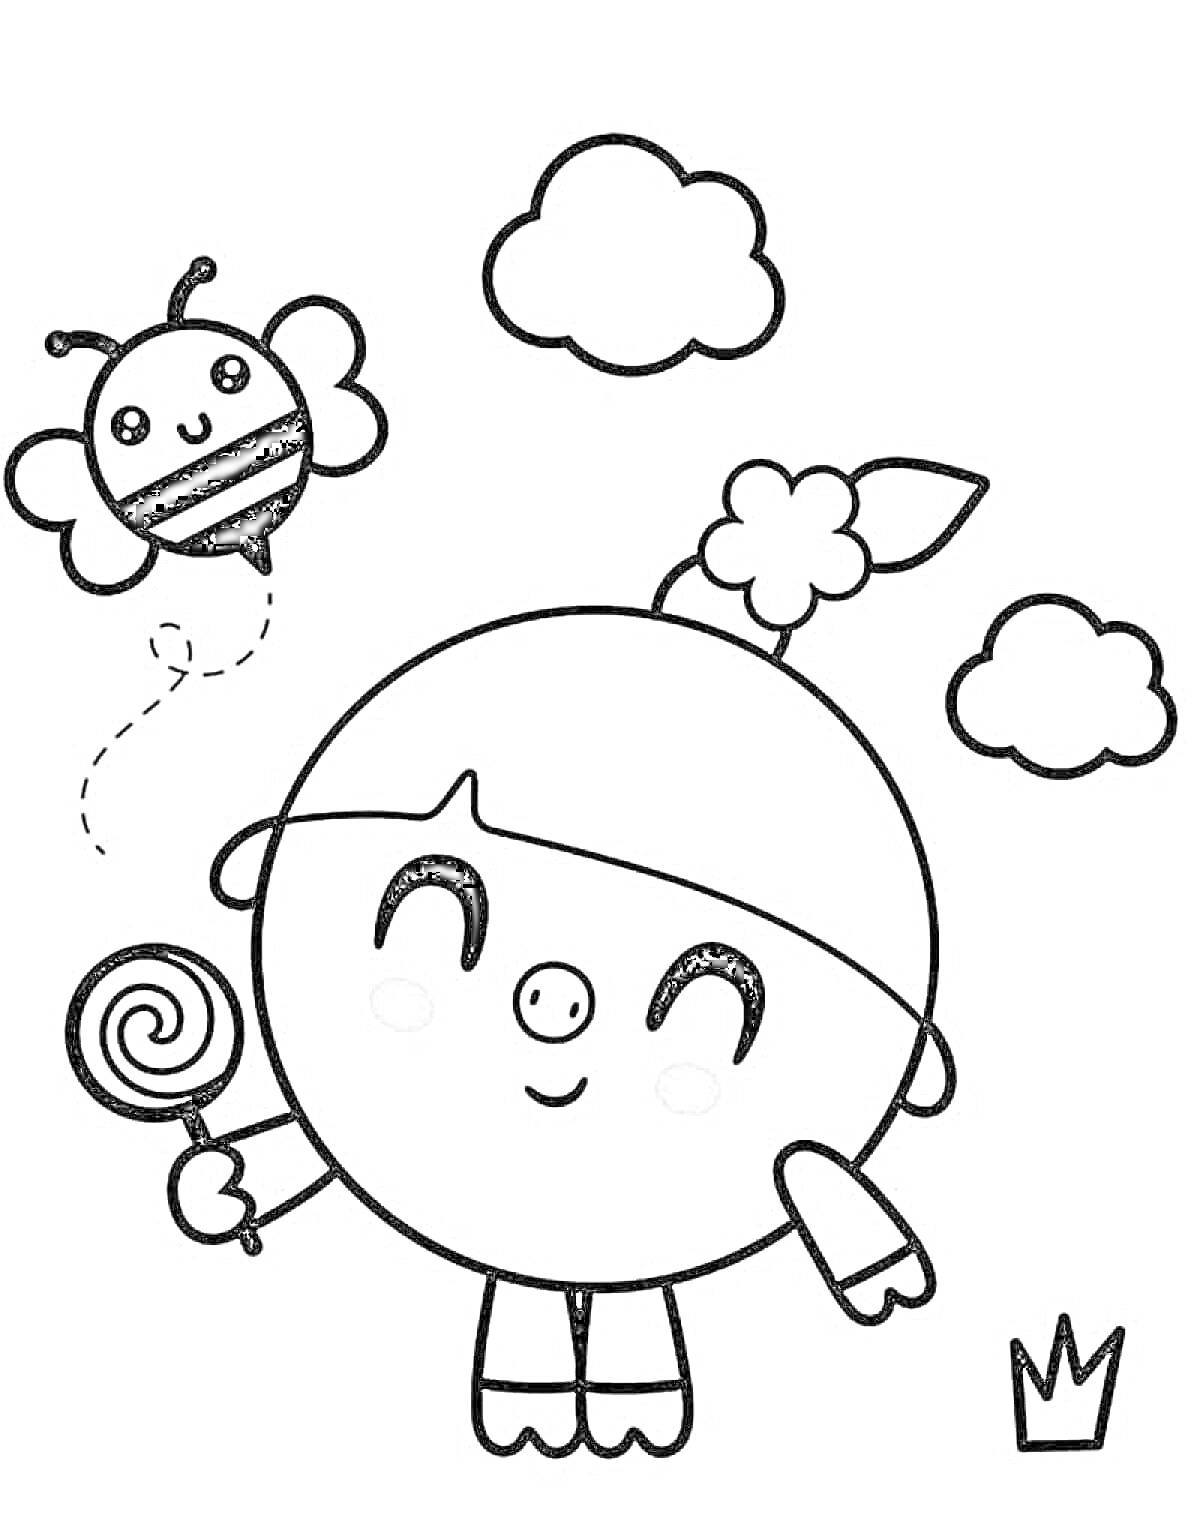 Раскраска Малышарик с леденцом, пчелка, облака и корона